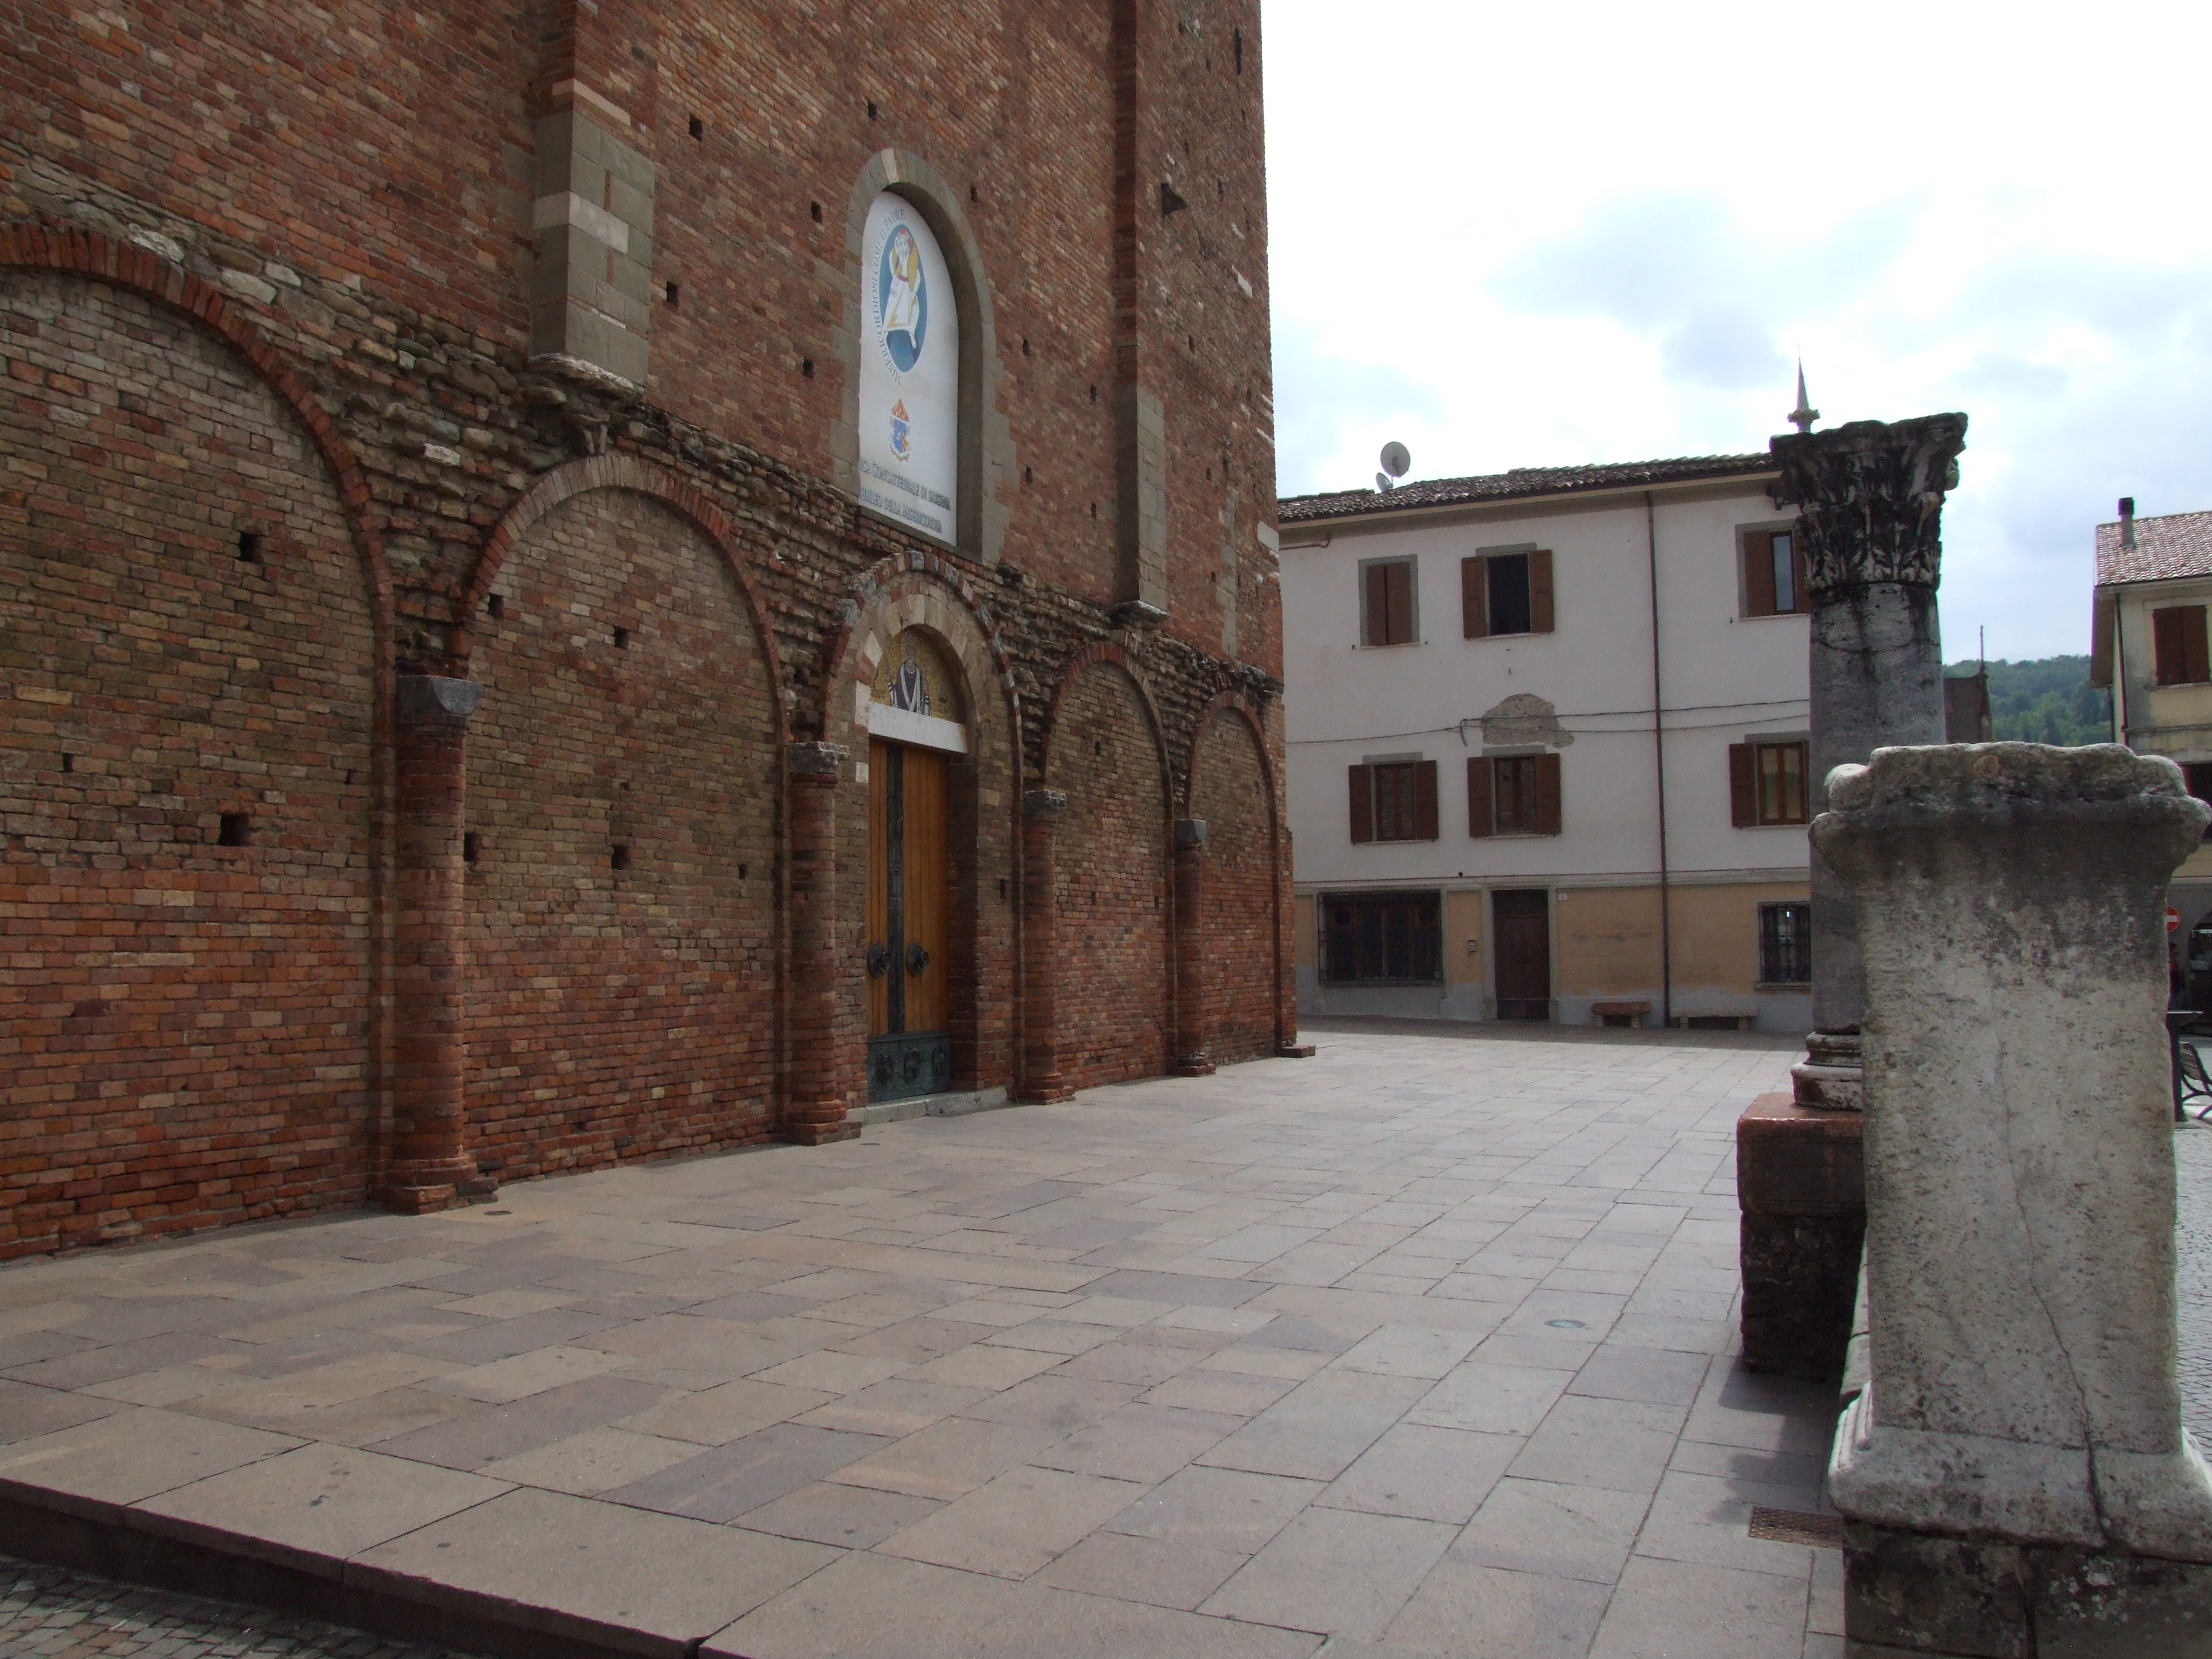 photo: https://upload.wikimedia.org/wikipedia/commons/b/b2/Basilica_concattedrale_di_Sarsina_-_7.jpg